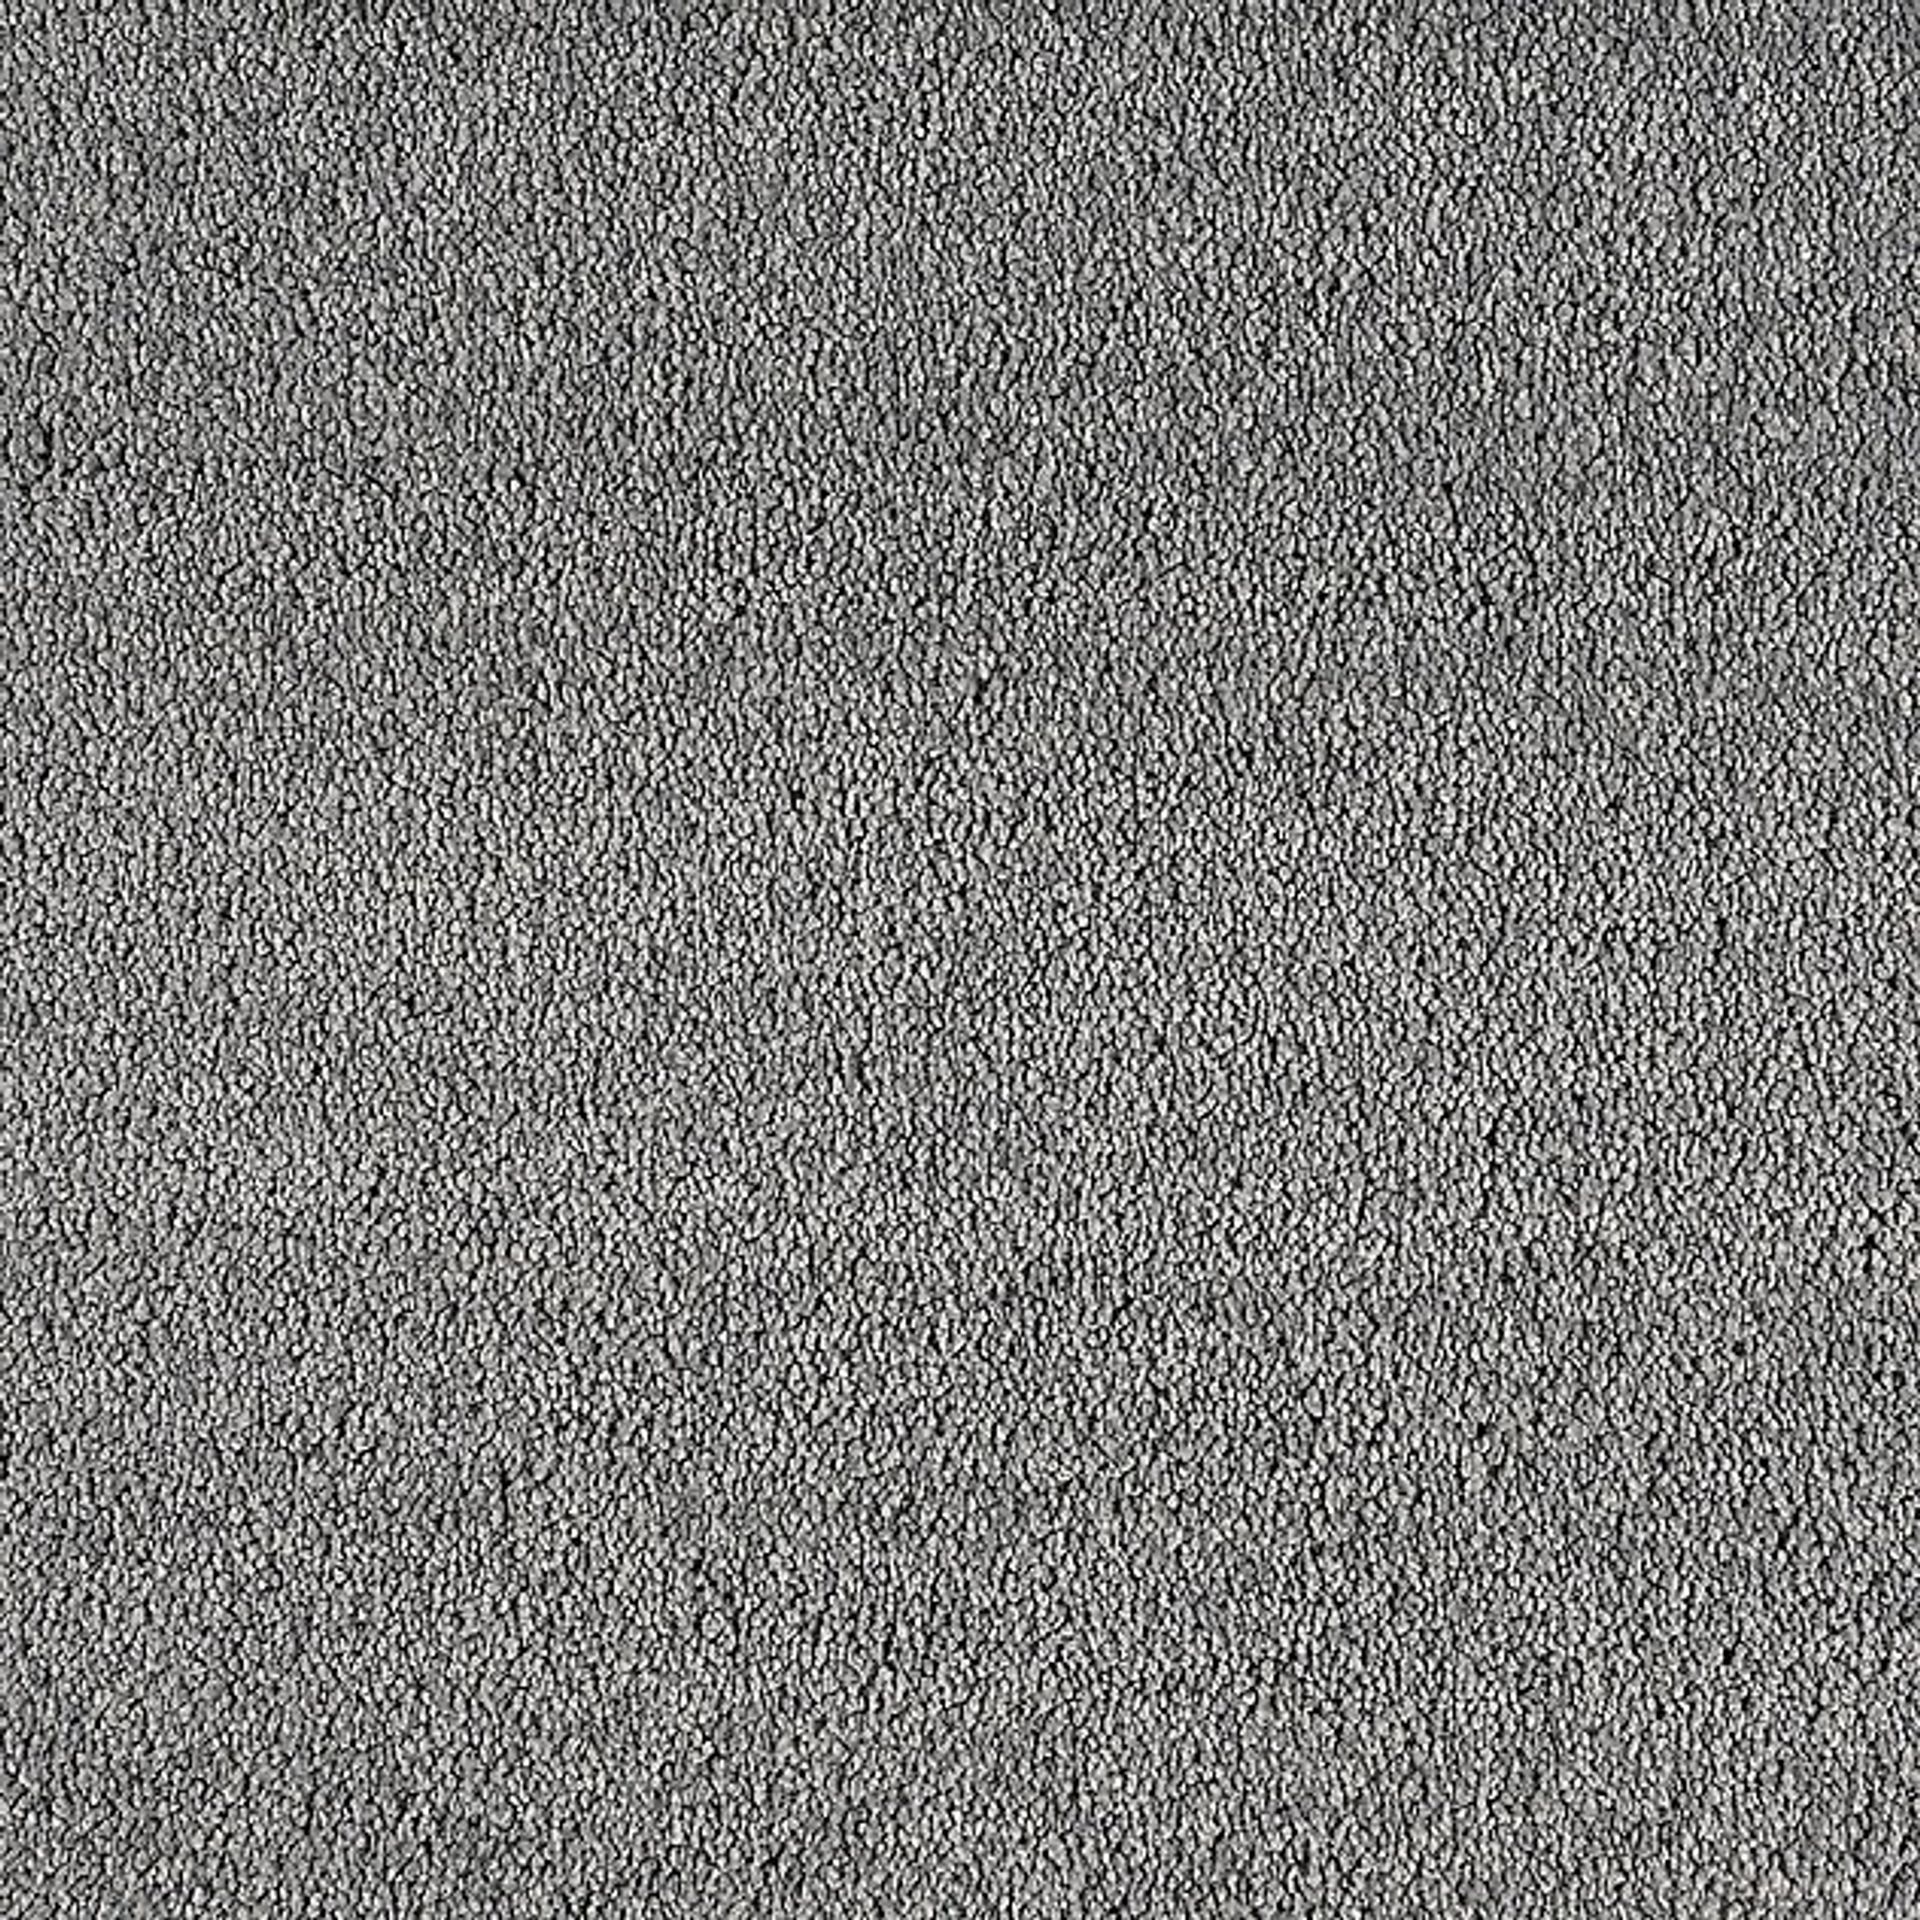 Teppichboden Infloor-Girloon Coco Shag/Langflor Grau 541 uni - Rollenbreite 400 cm